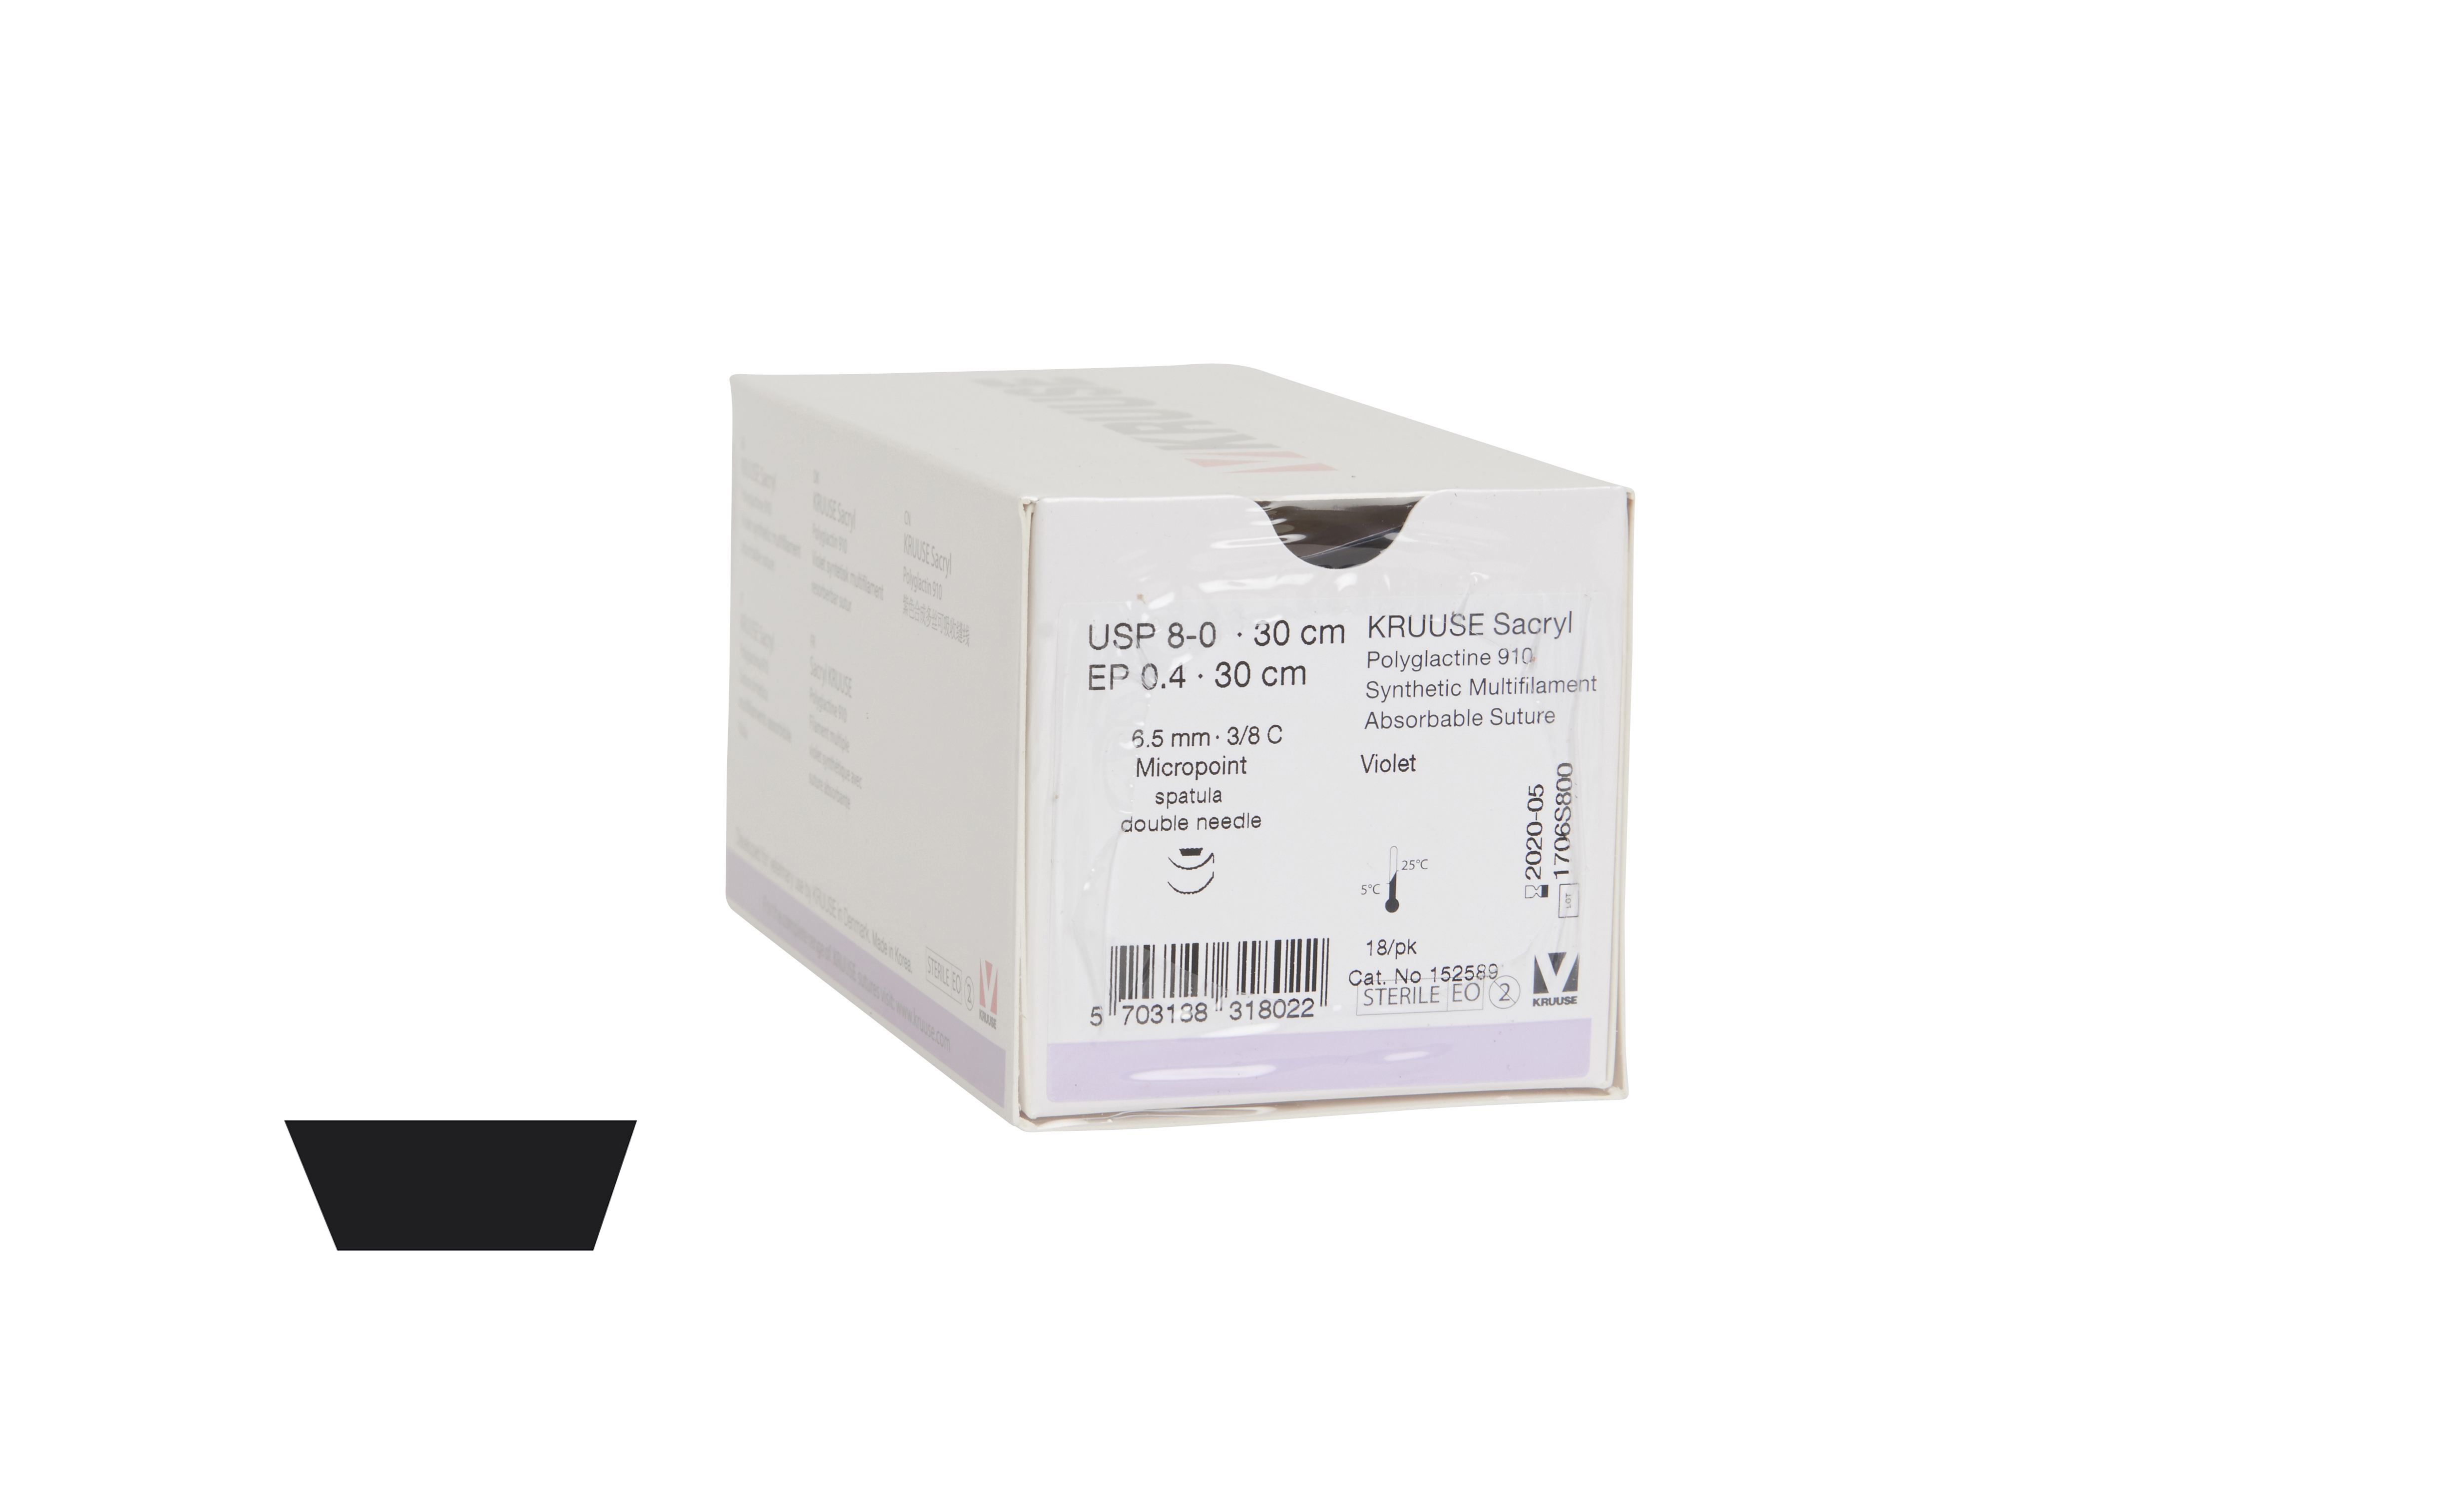 KRUUSE Sacryl suture, USP 8-0/EP 0.4, 30 cm, violet, 6.5 mm, 3/8C, micropoint spatula (double needle), 18/pk